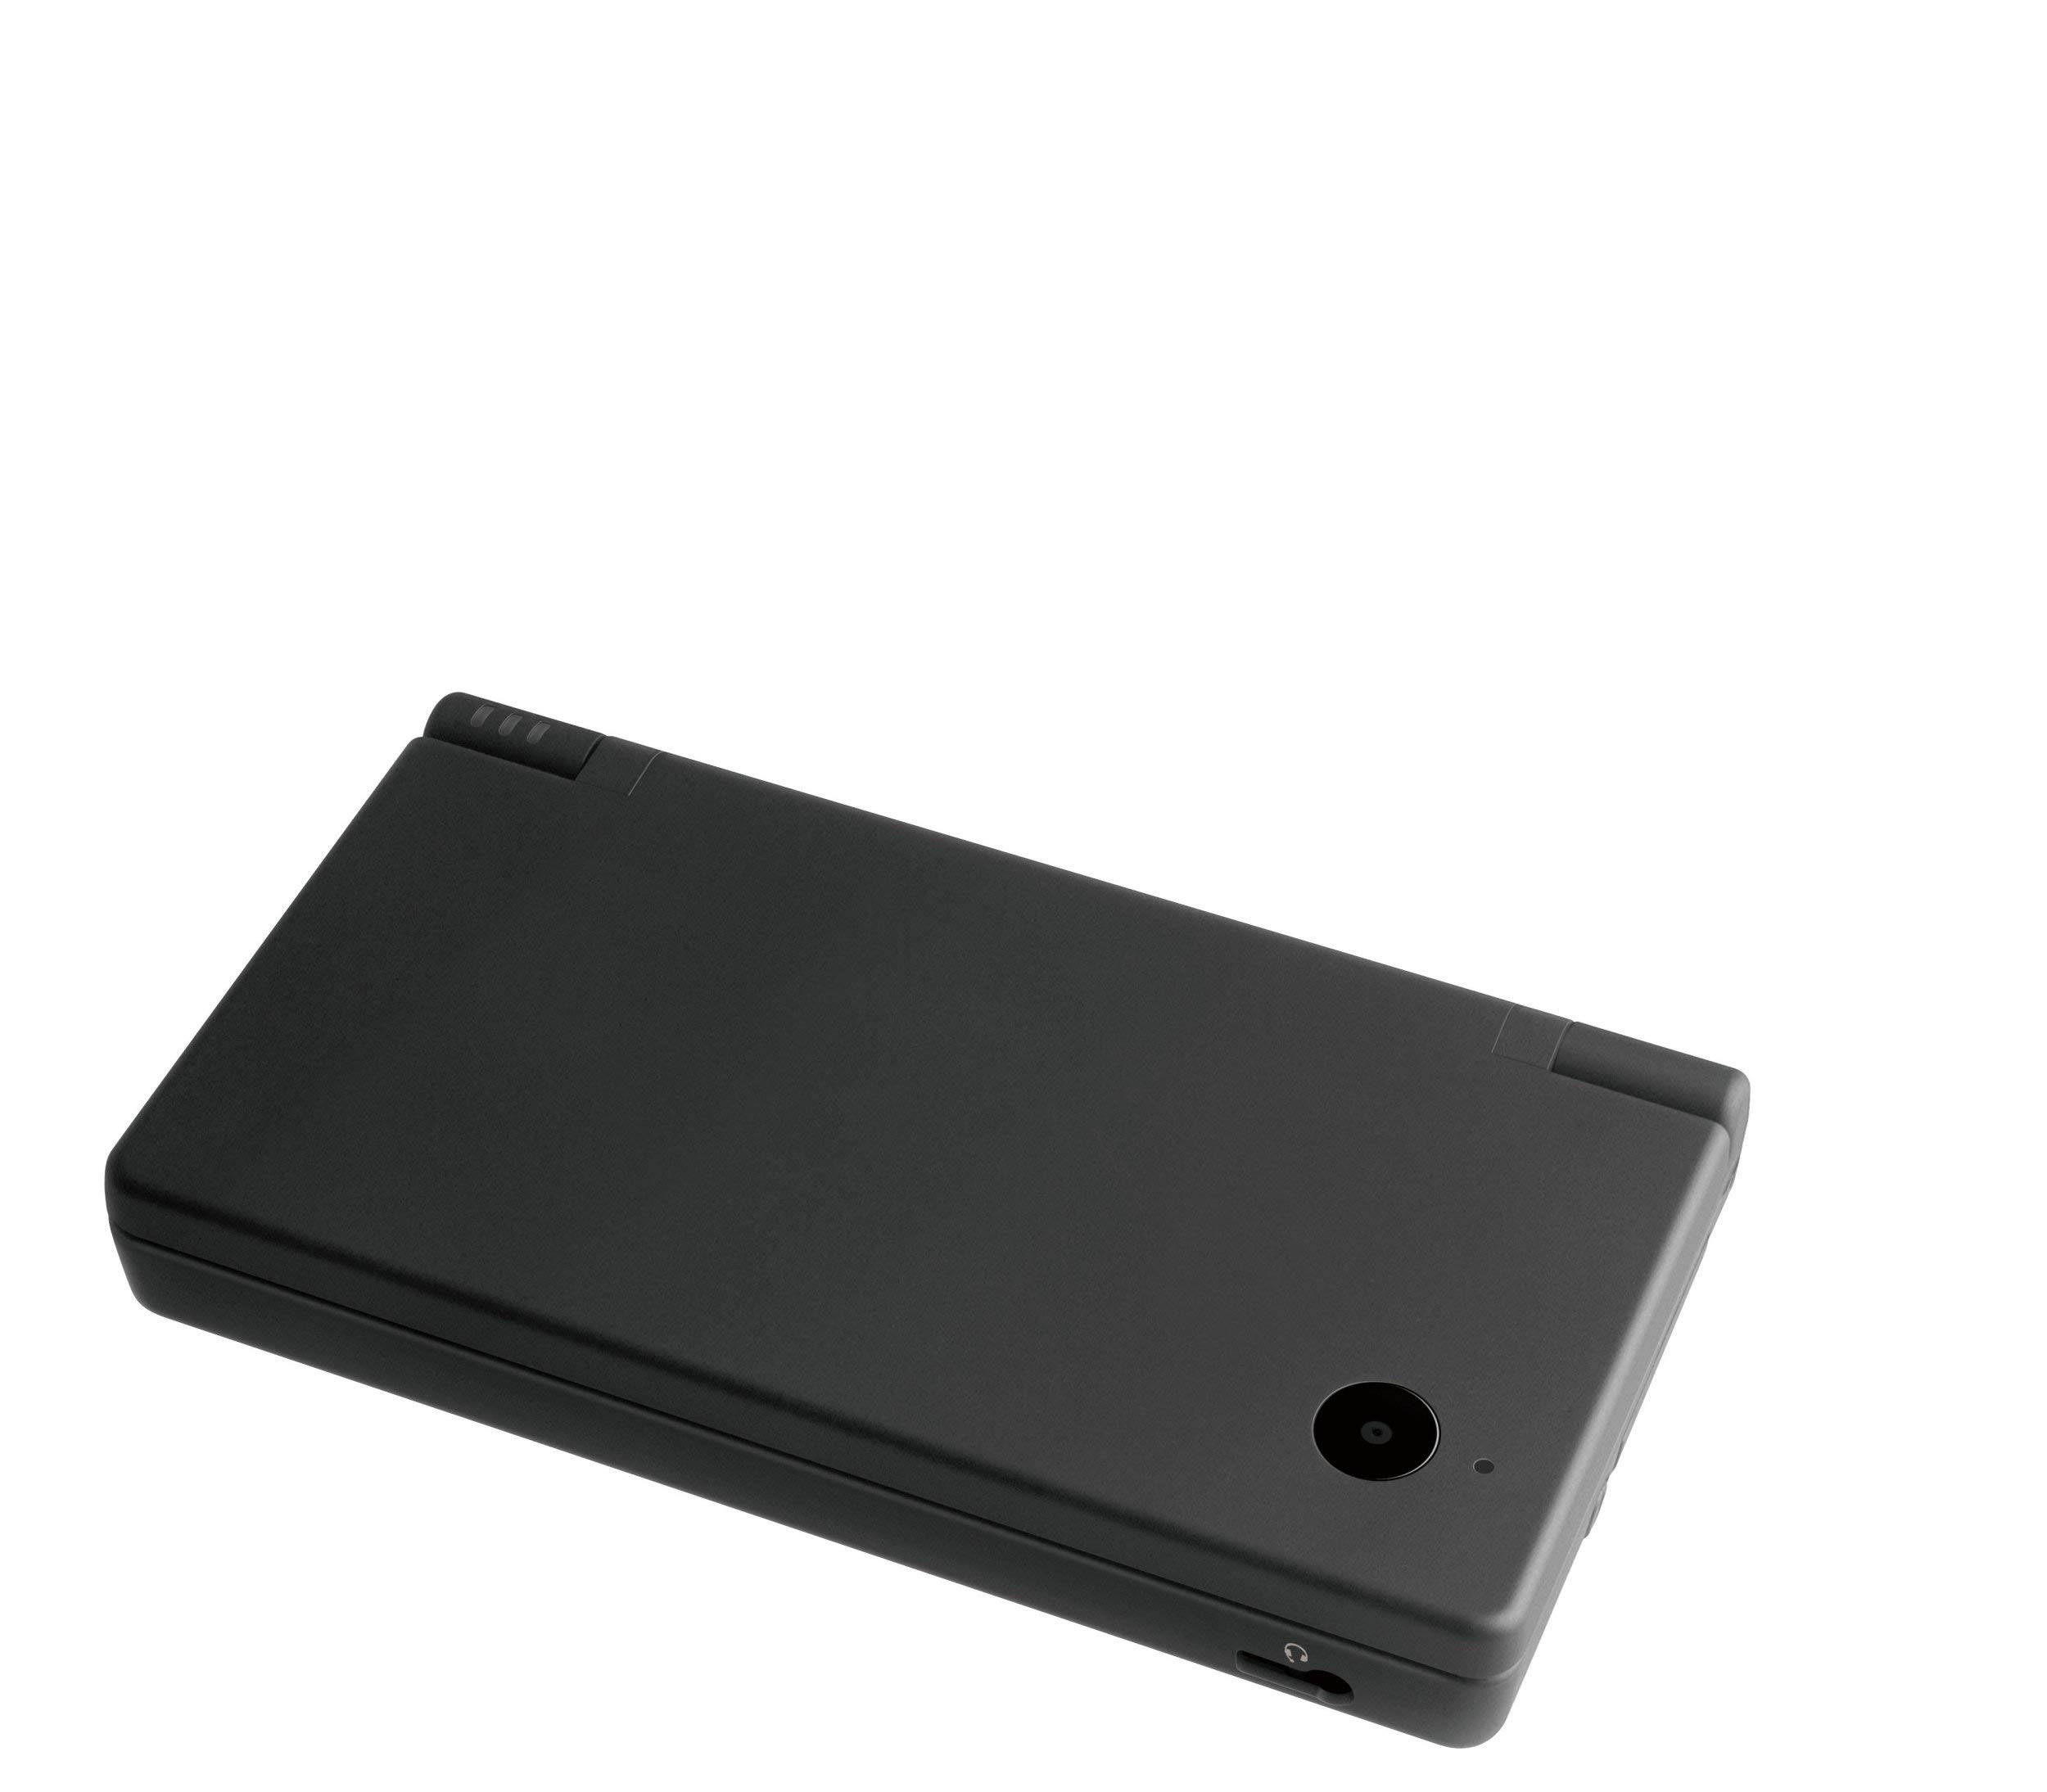 Nintendo DSi - Handheld game console - black (Renewed)